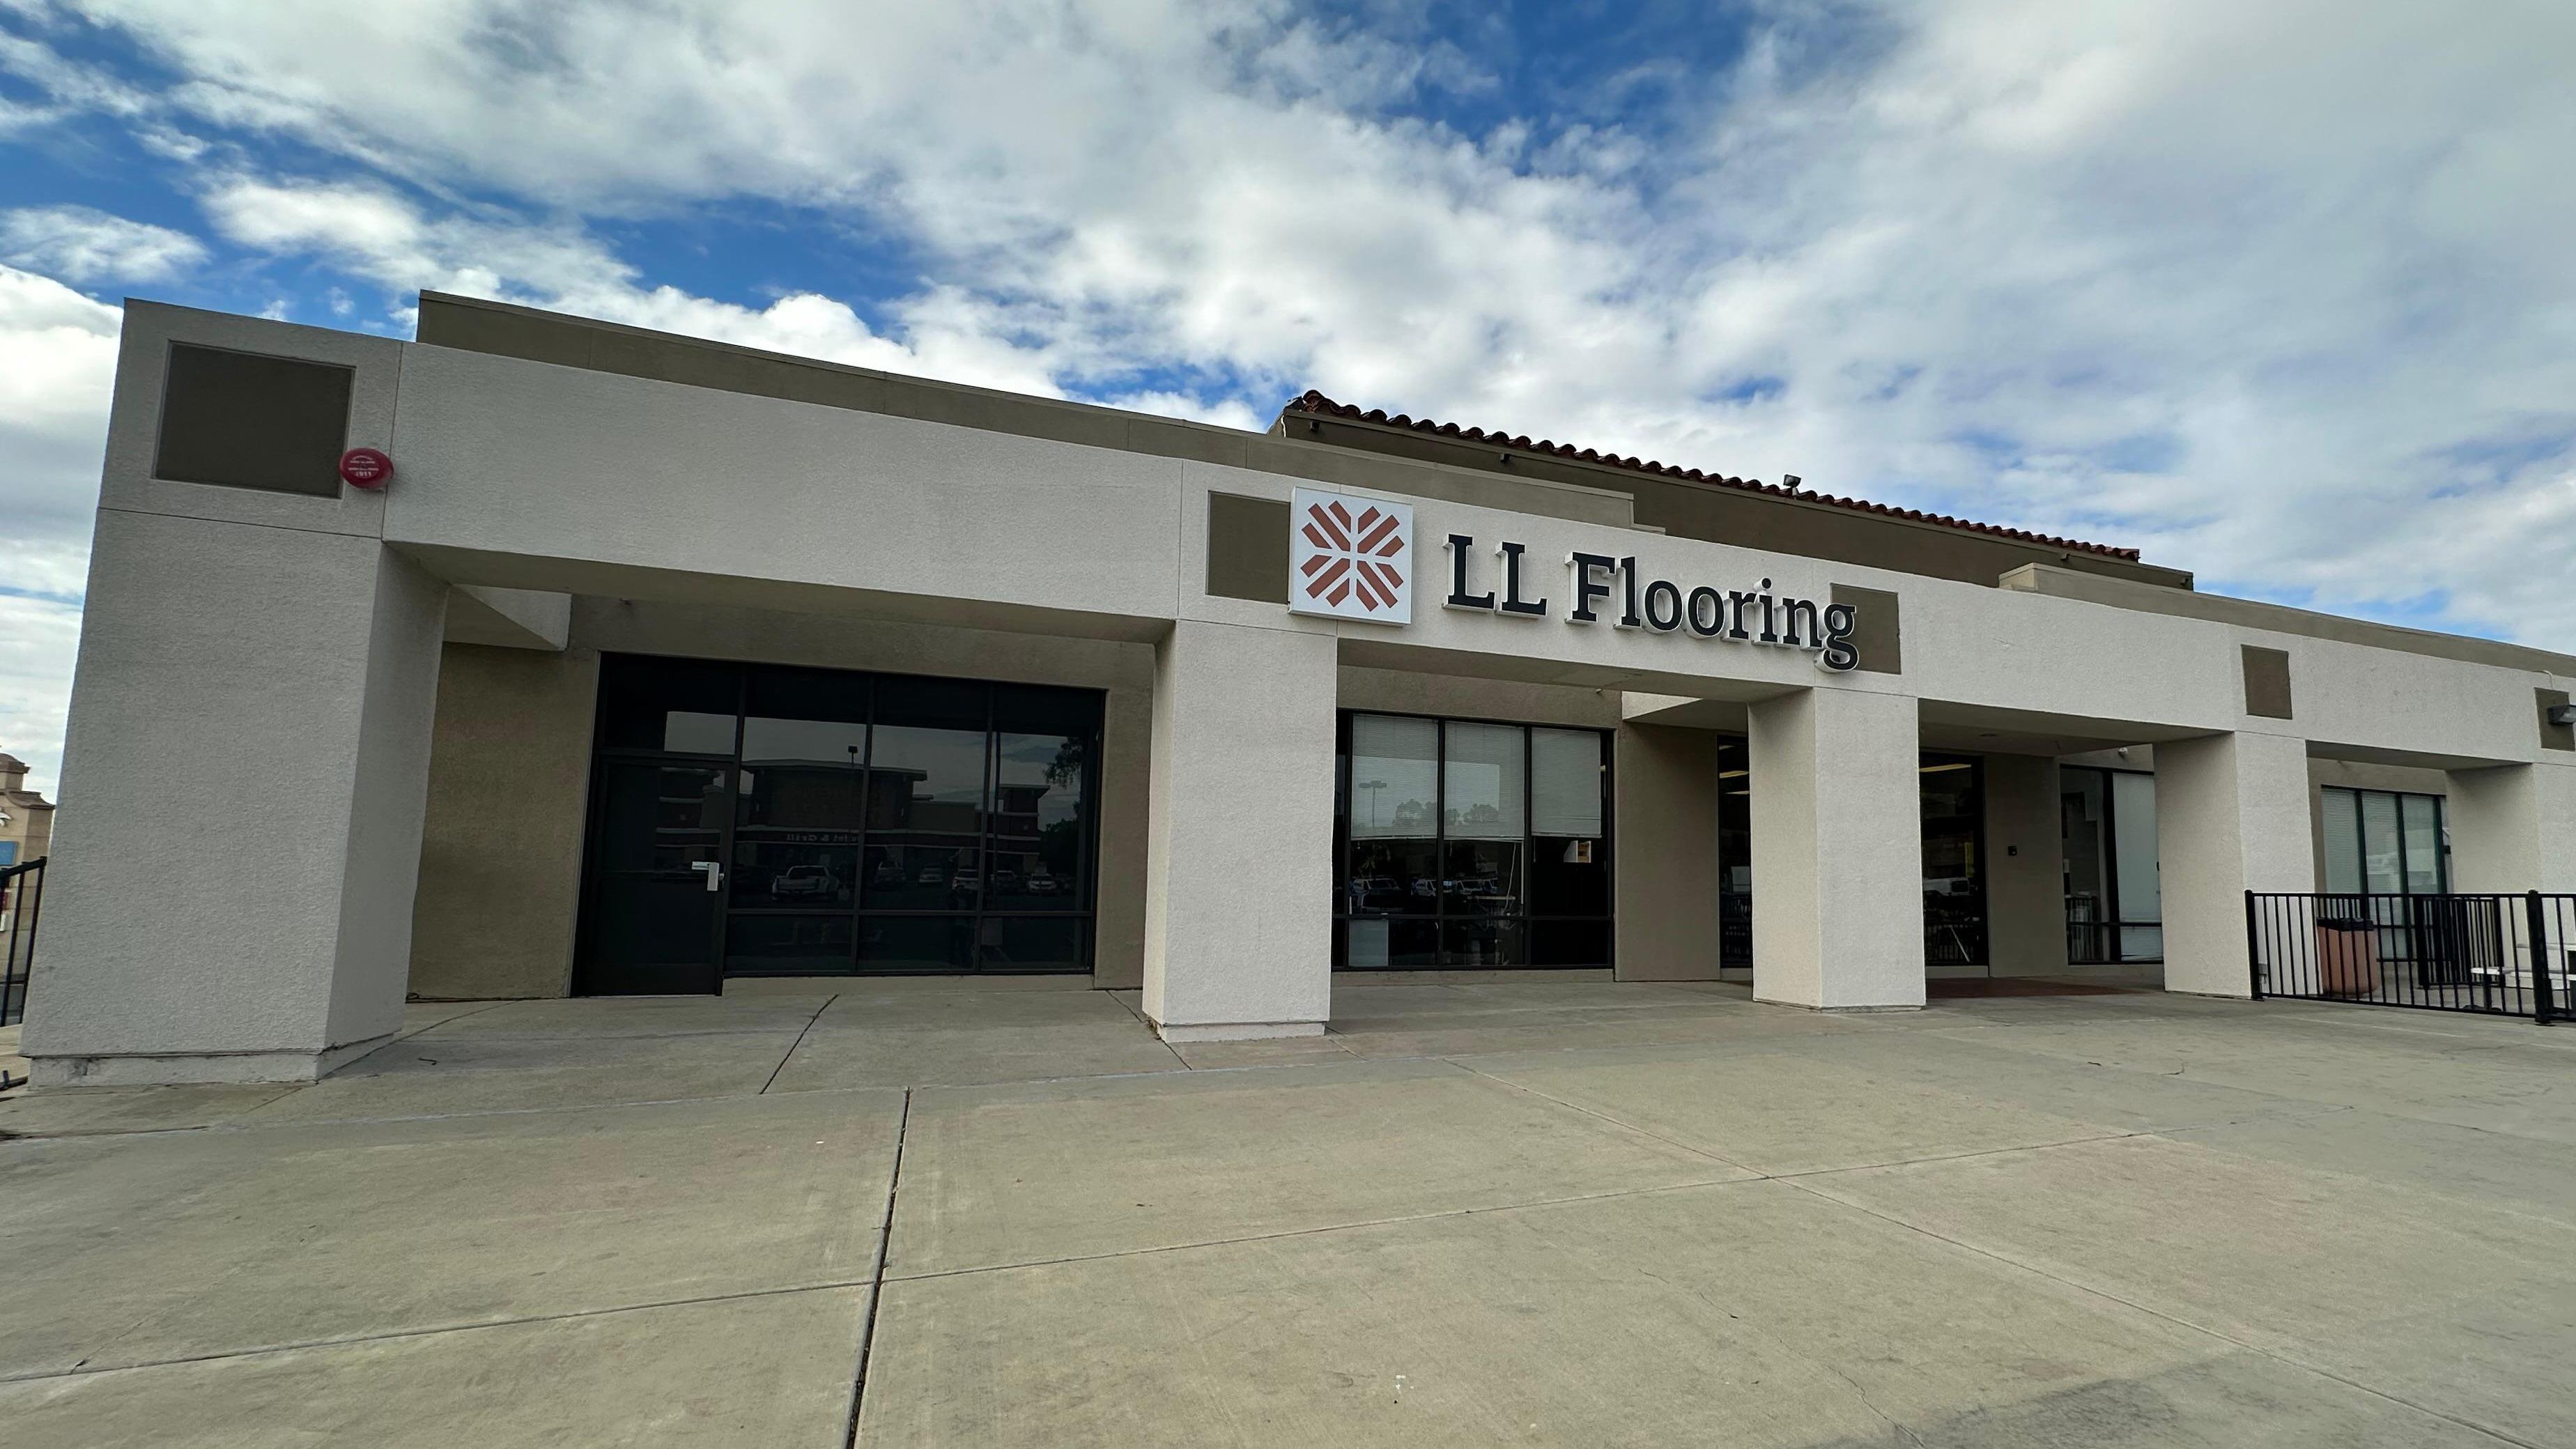 LL Flooring #1281 Moreno Valley | 12125 Day Street | Storefront